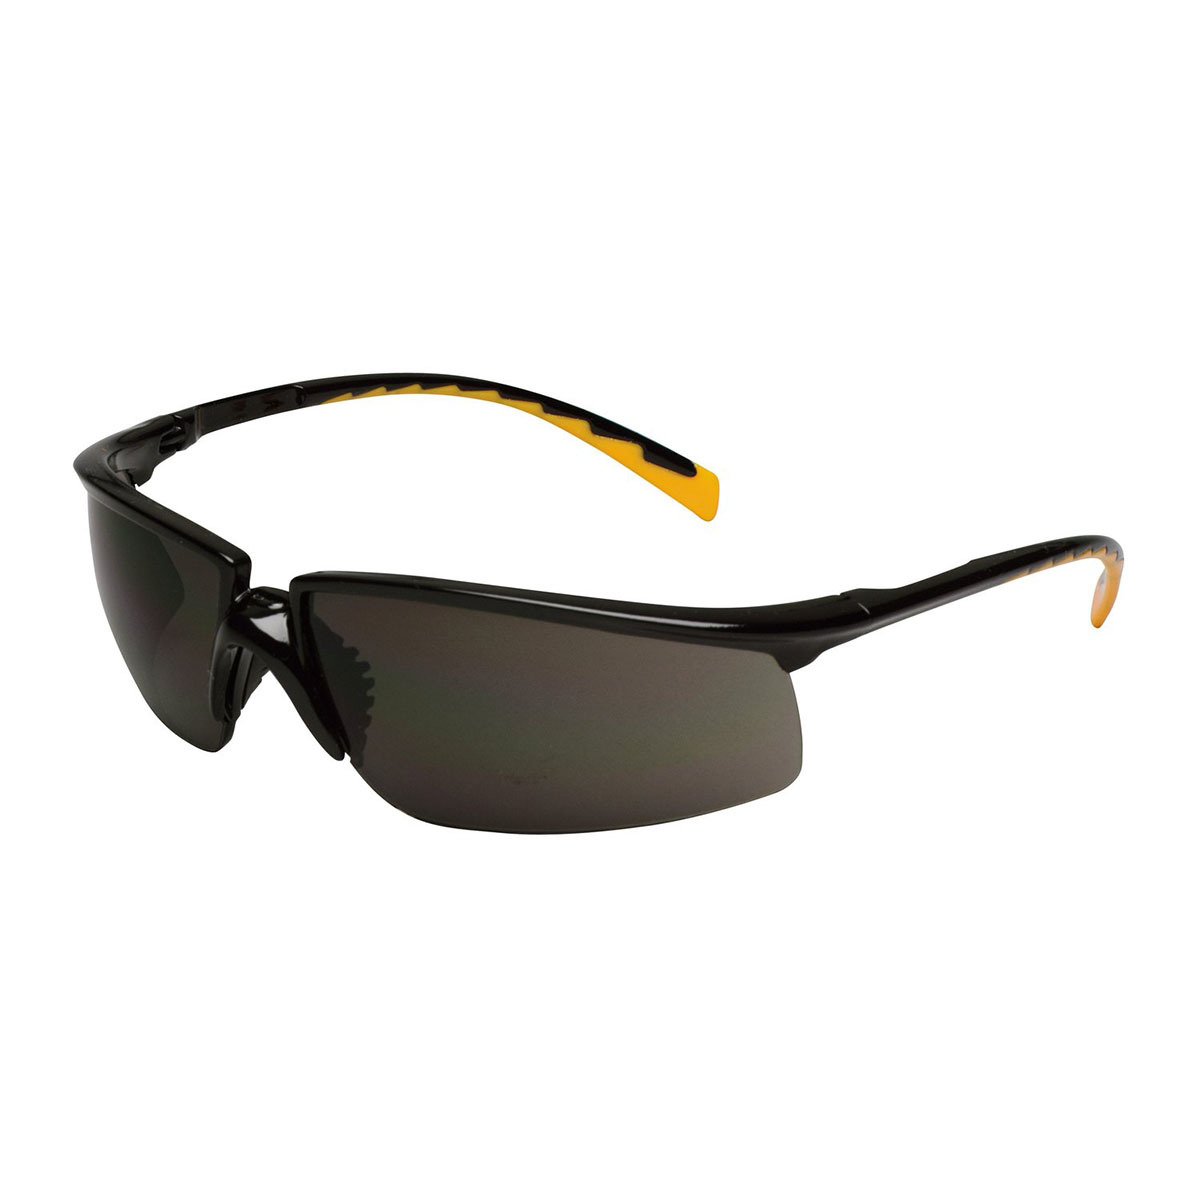 Safety Glasses 3M Privo Gray Anti-Fog Anti-Scratch Lens w/Orange Accents - Safety Glasses